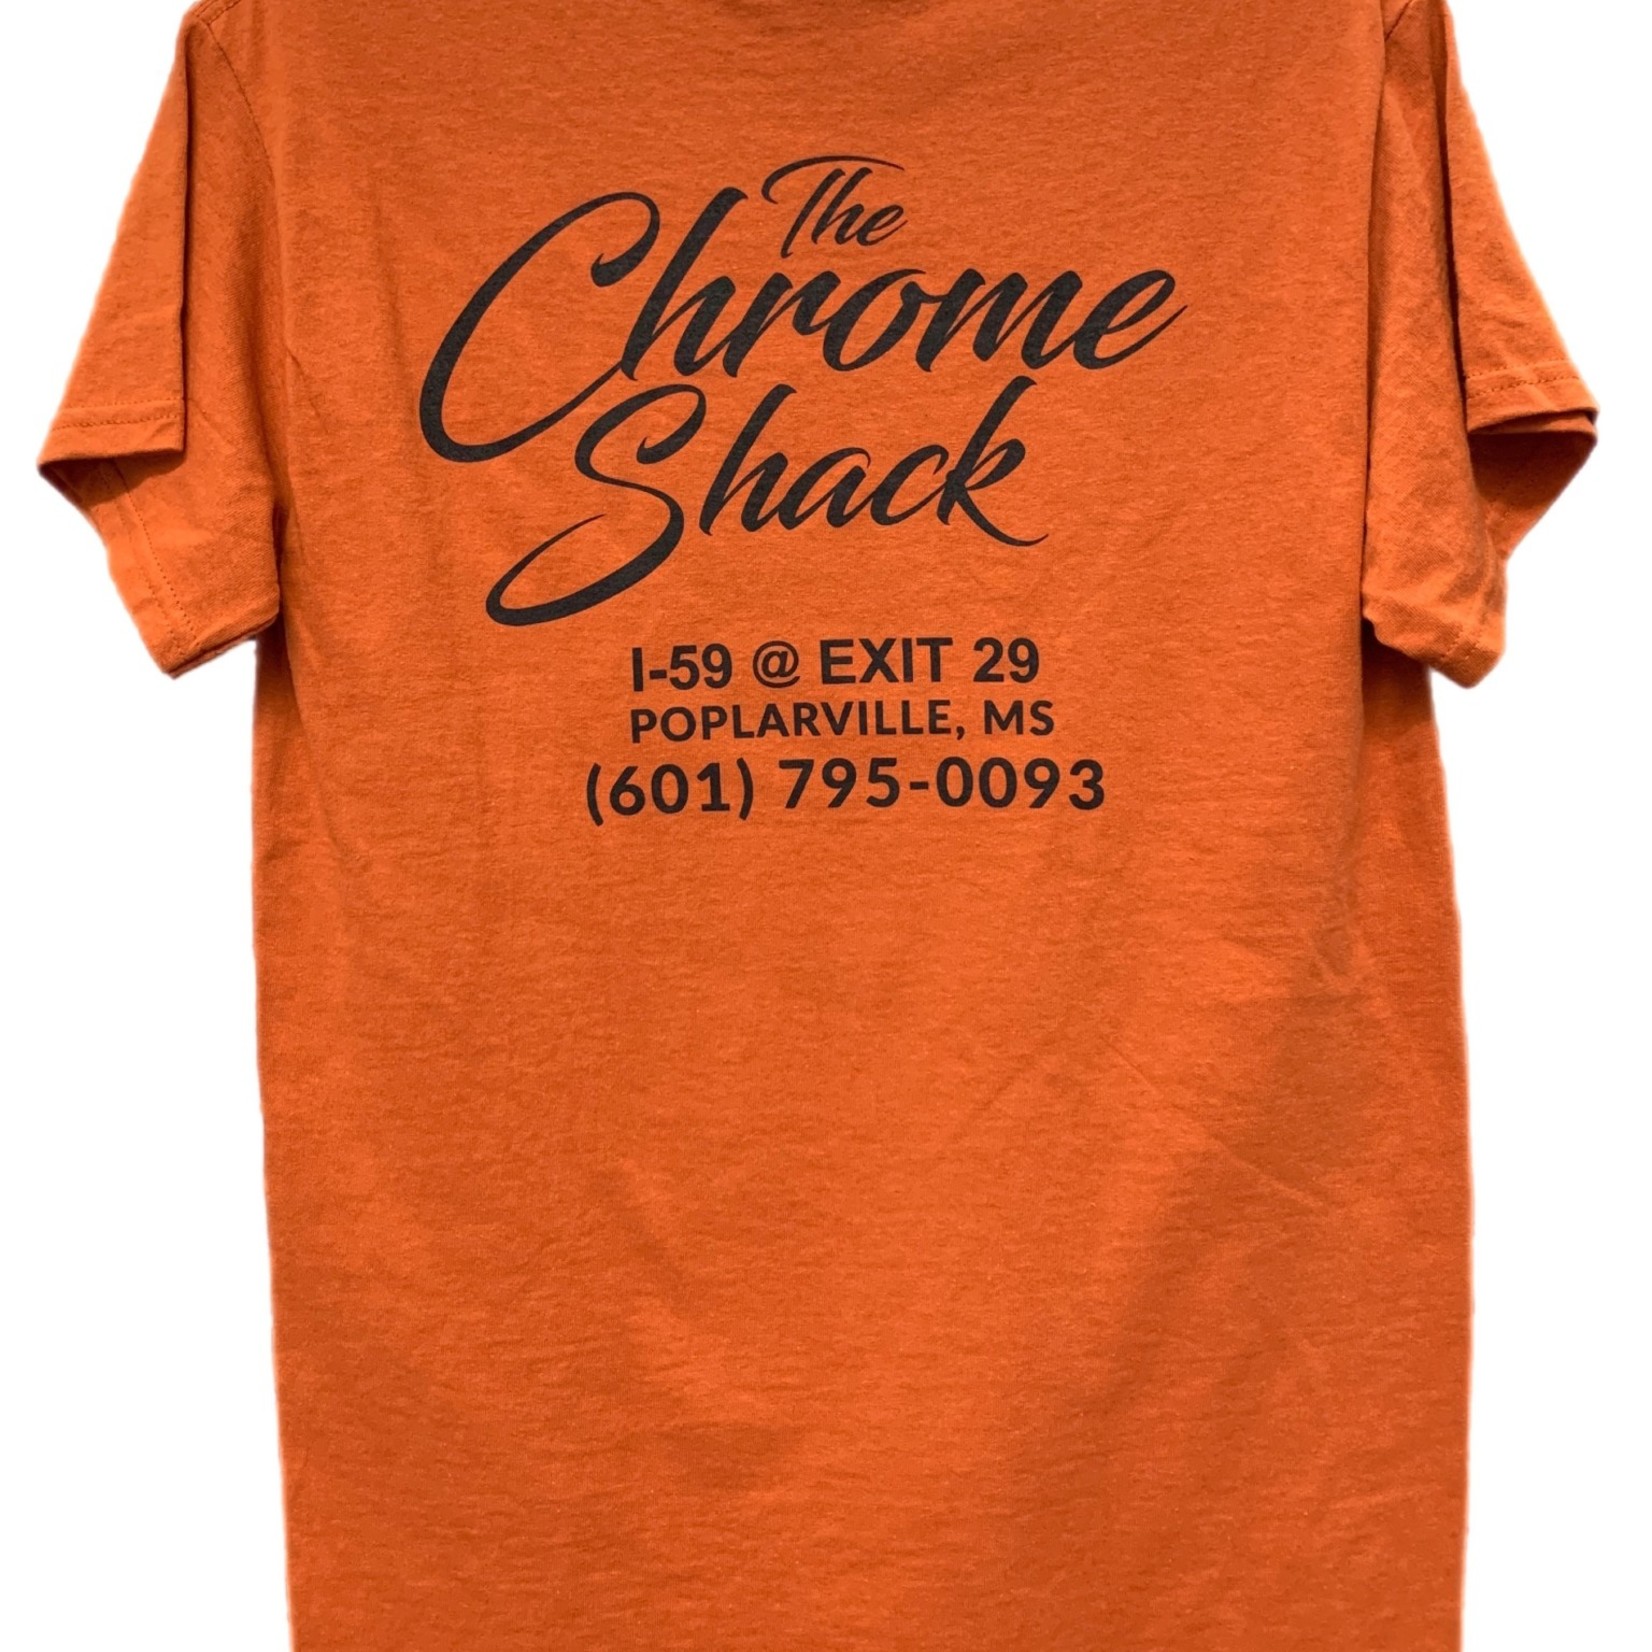 The Chrome Shack Info T-Shirt